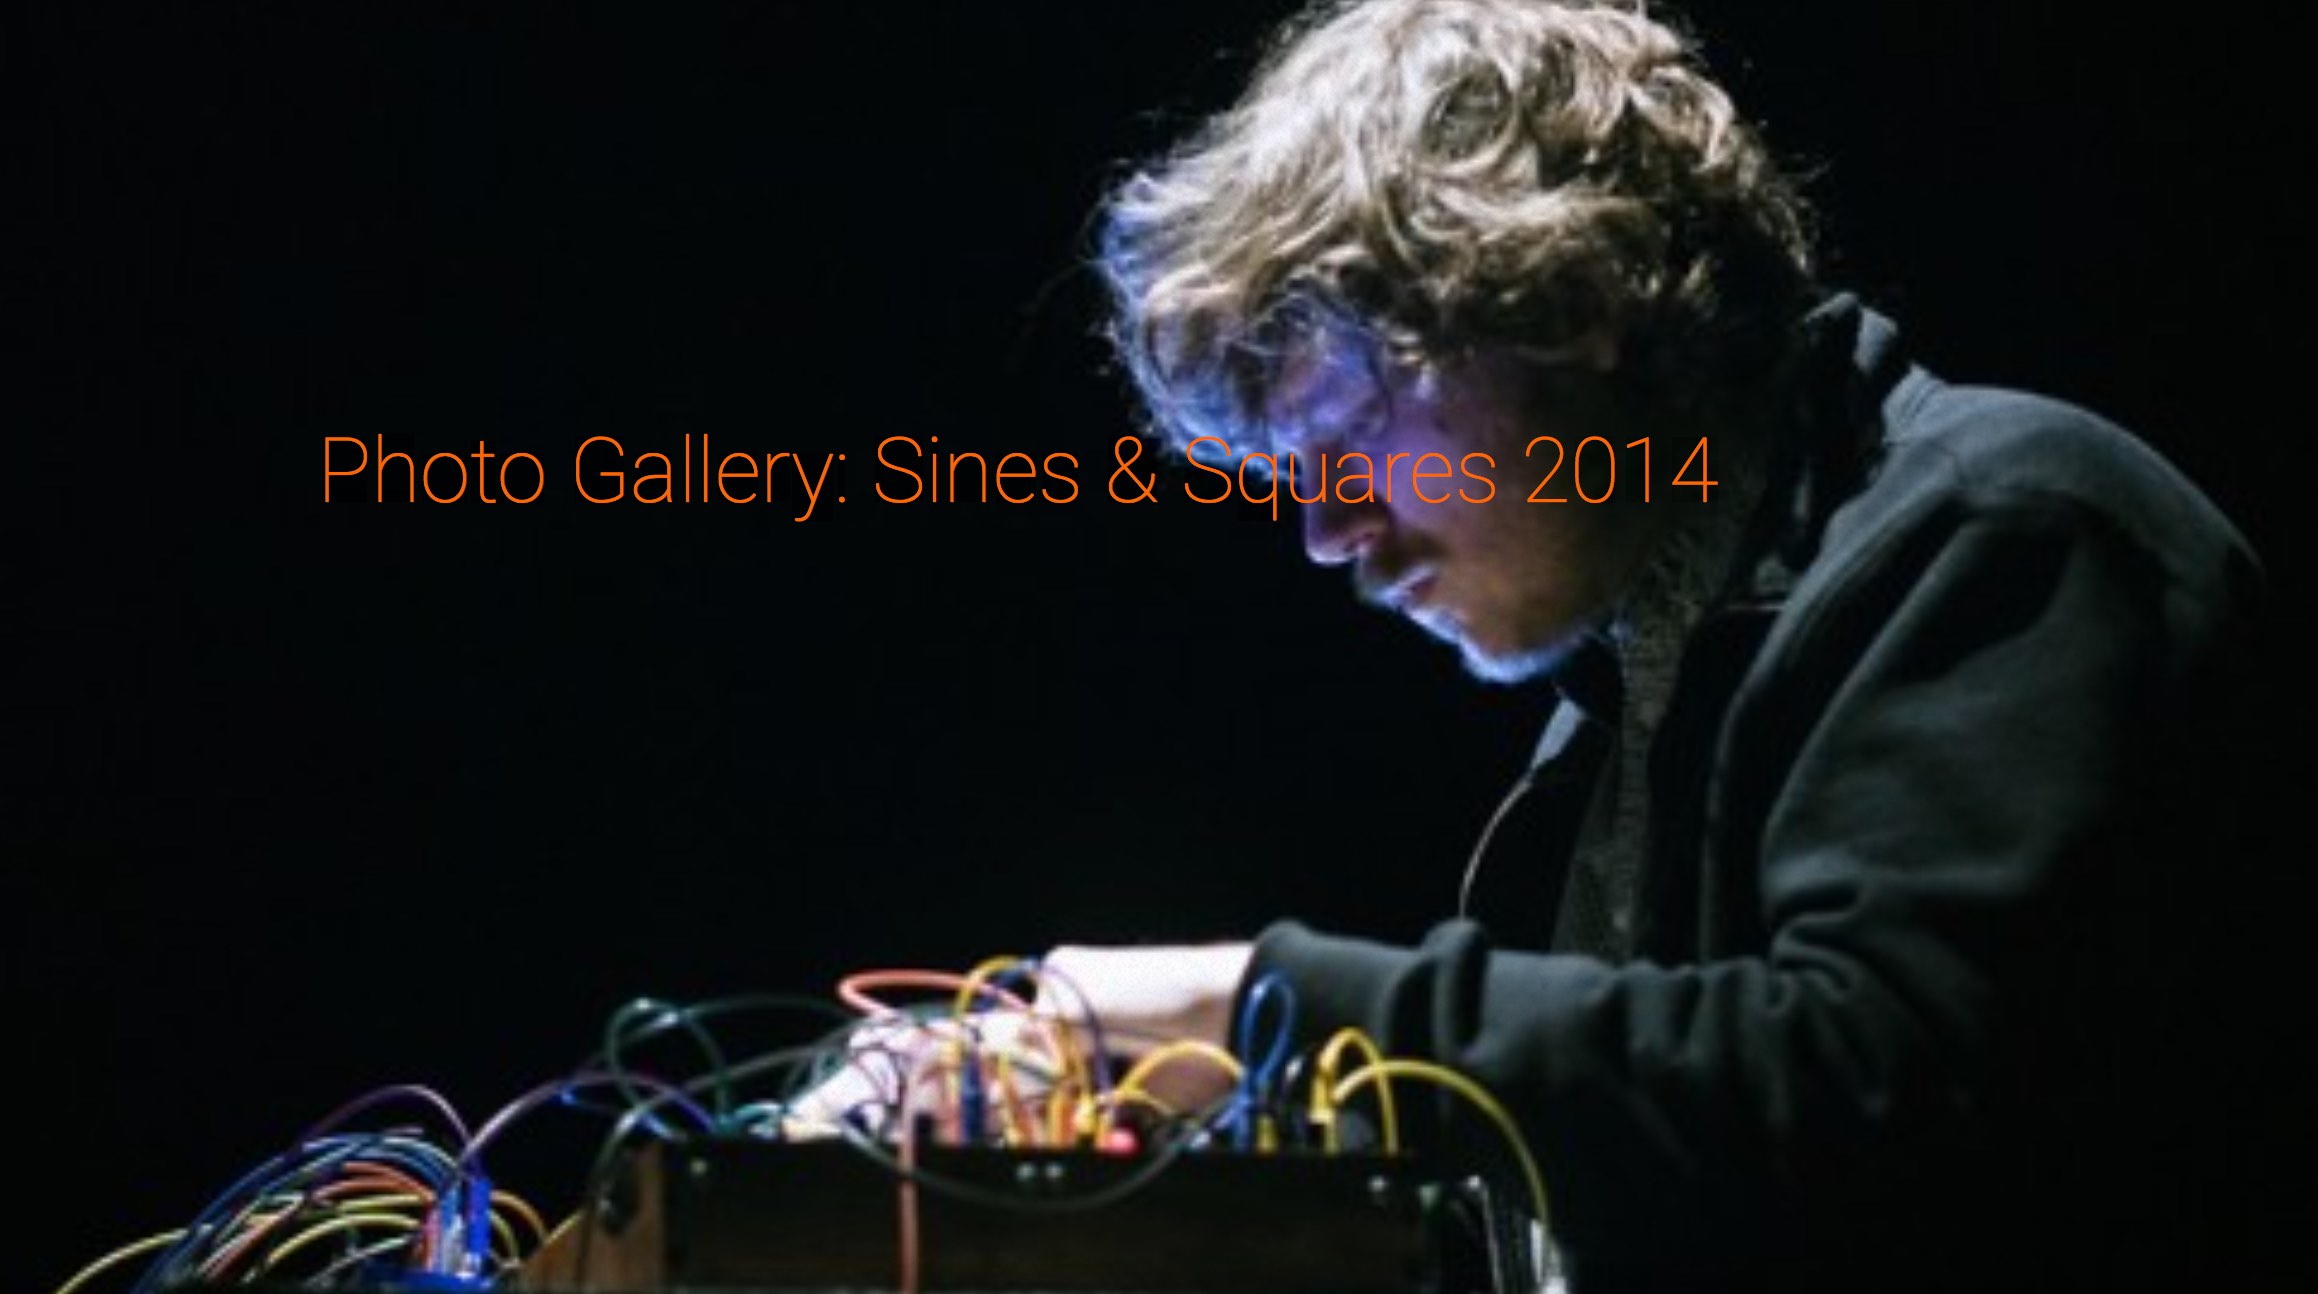 photo gallery 2014 - Sines & Squares 2014